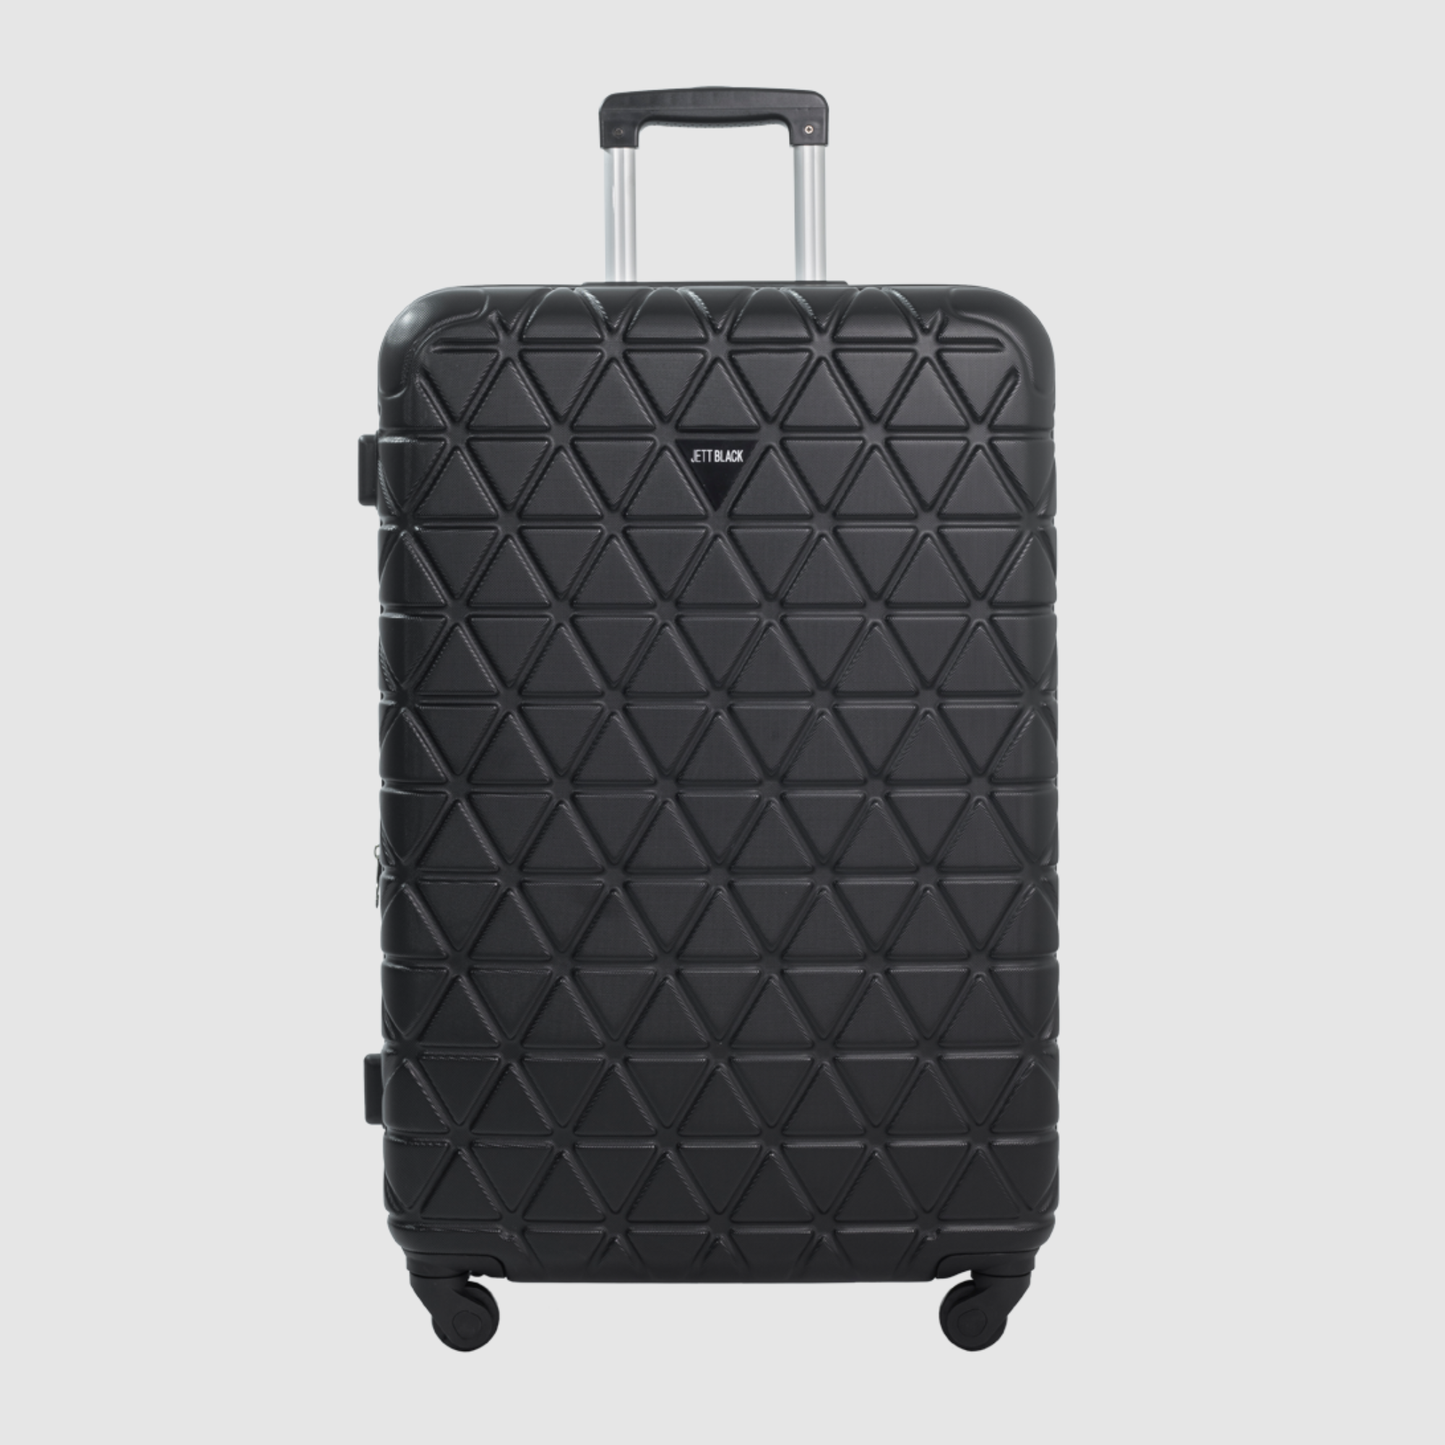 Onyx Black Paragon Large Suitcase